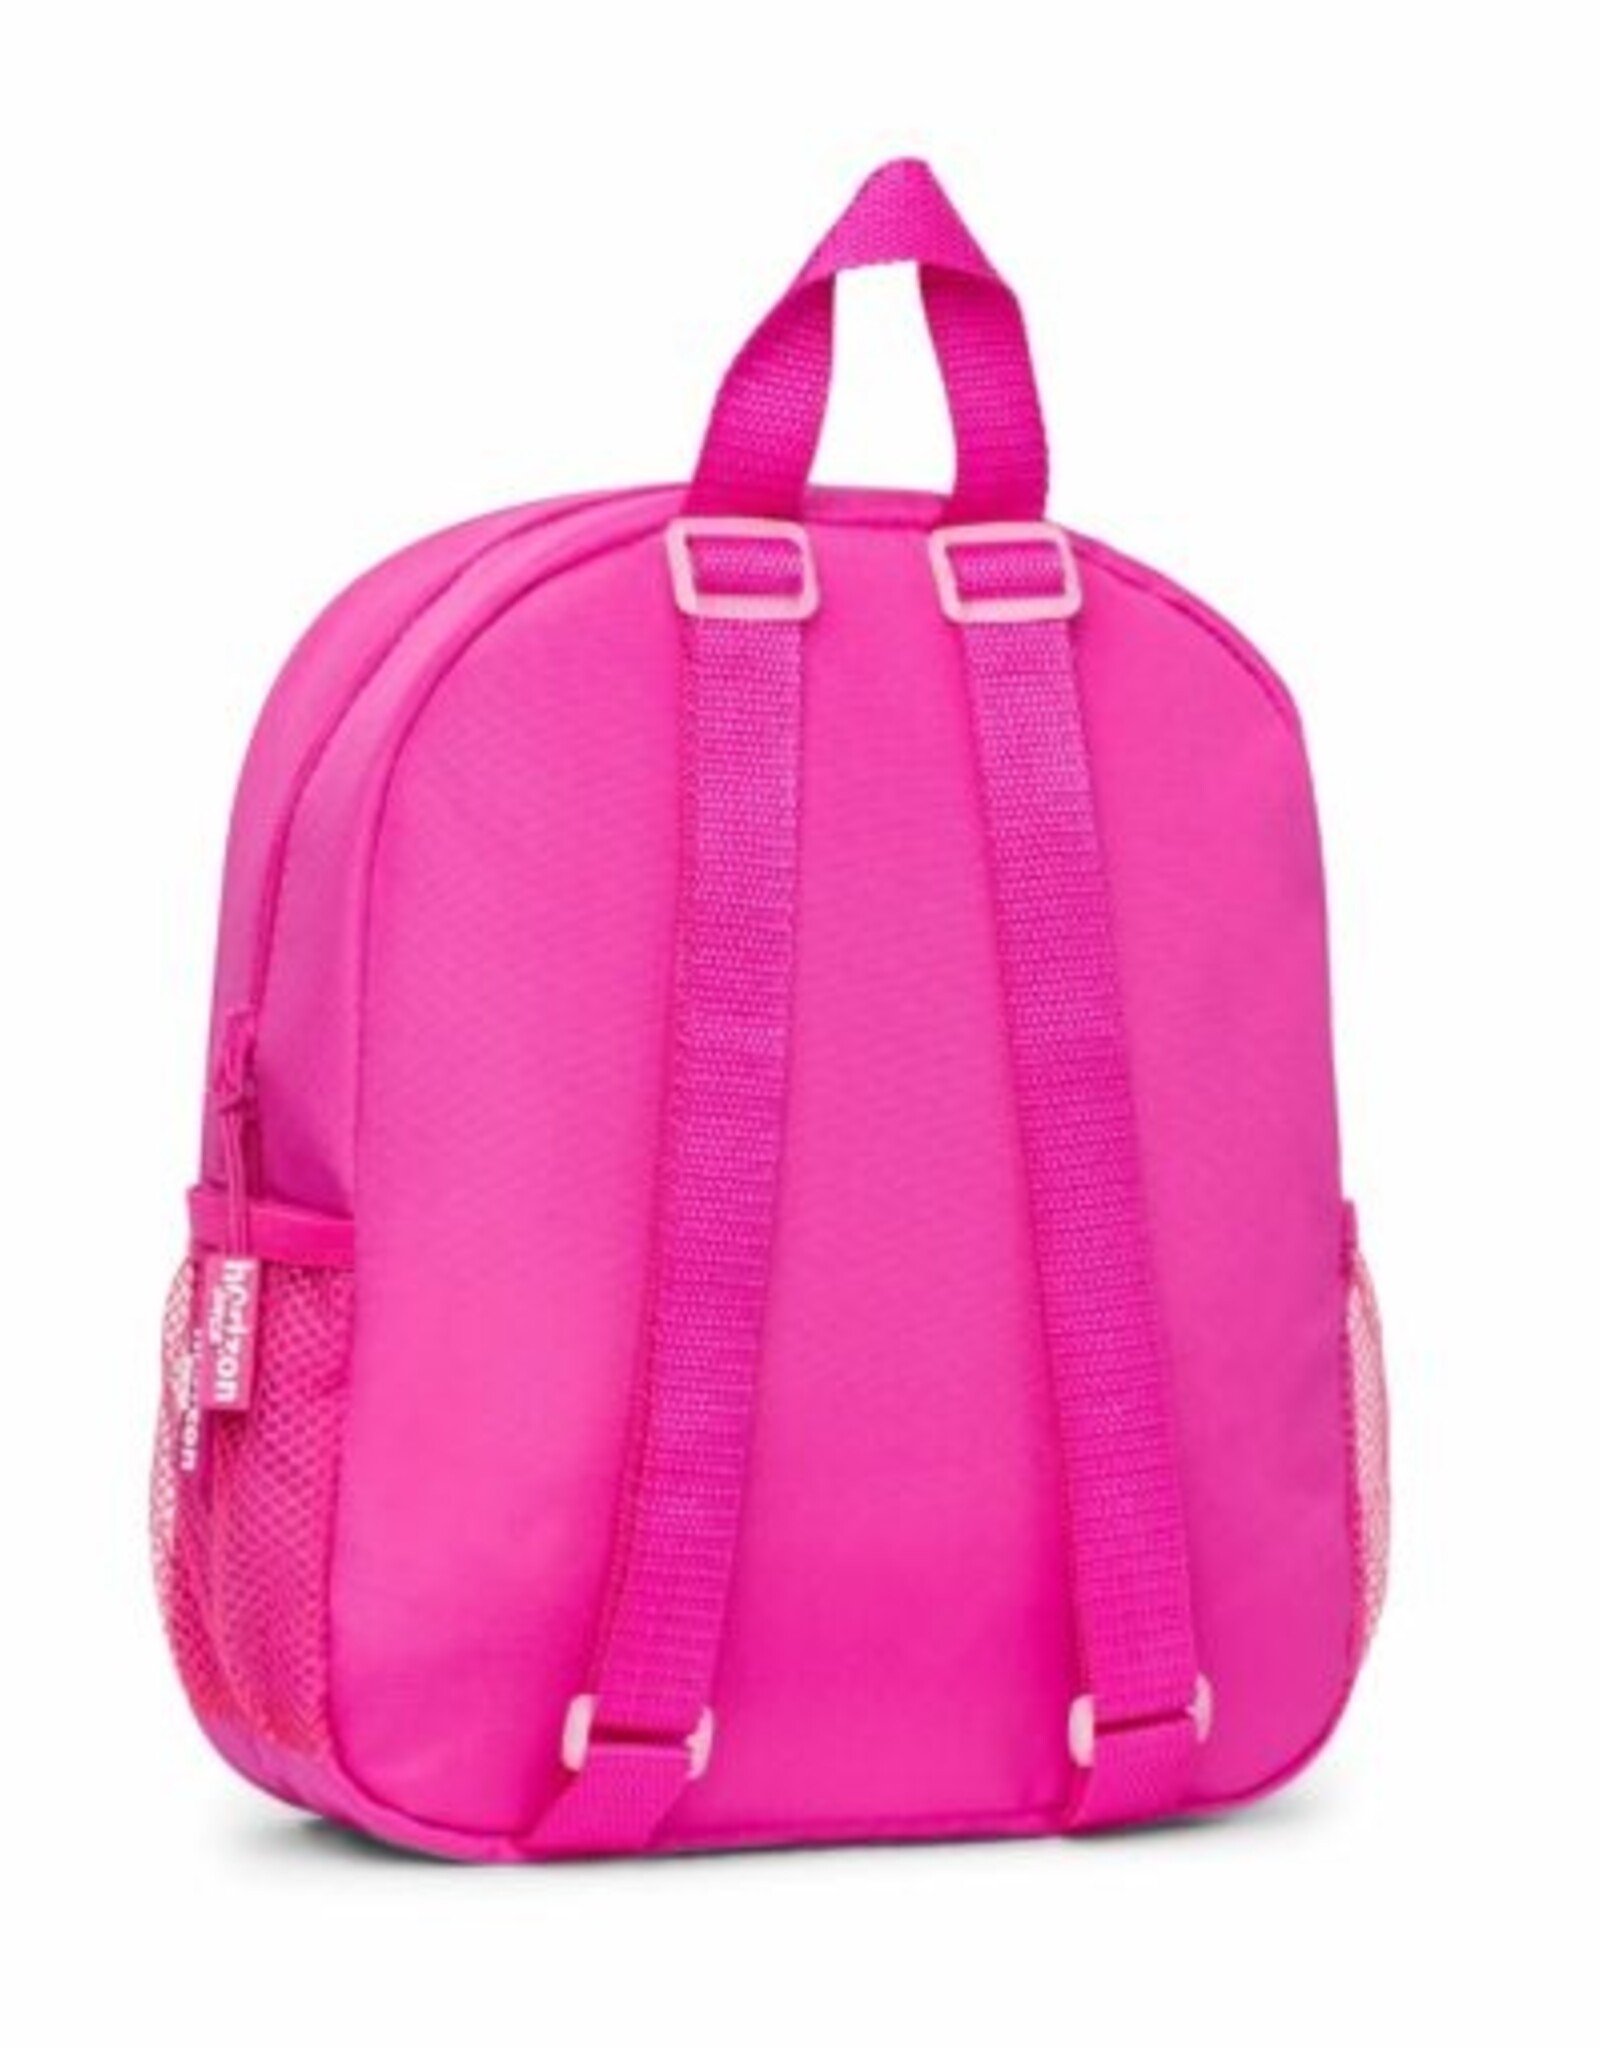 Horizon Bellamy Backpack